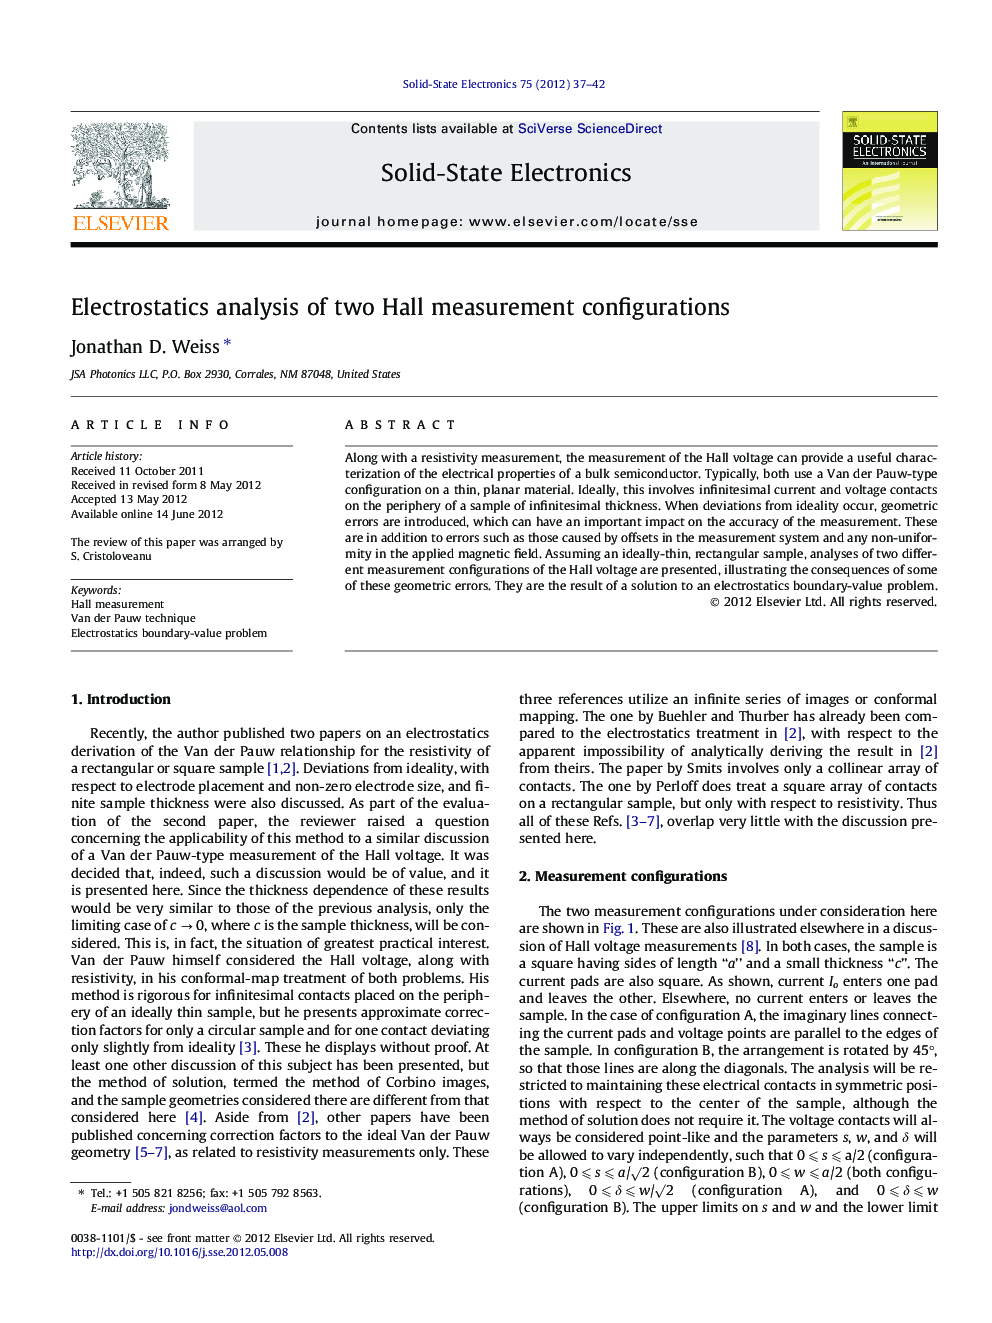 Electrostatics analysis of two Hall measurement configurations